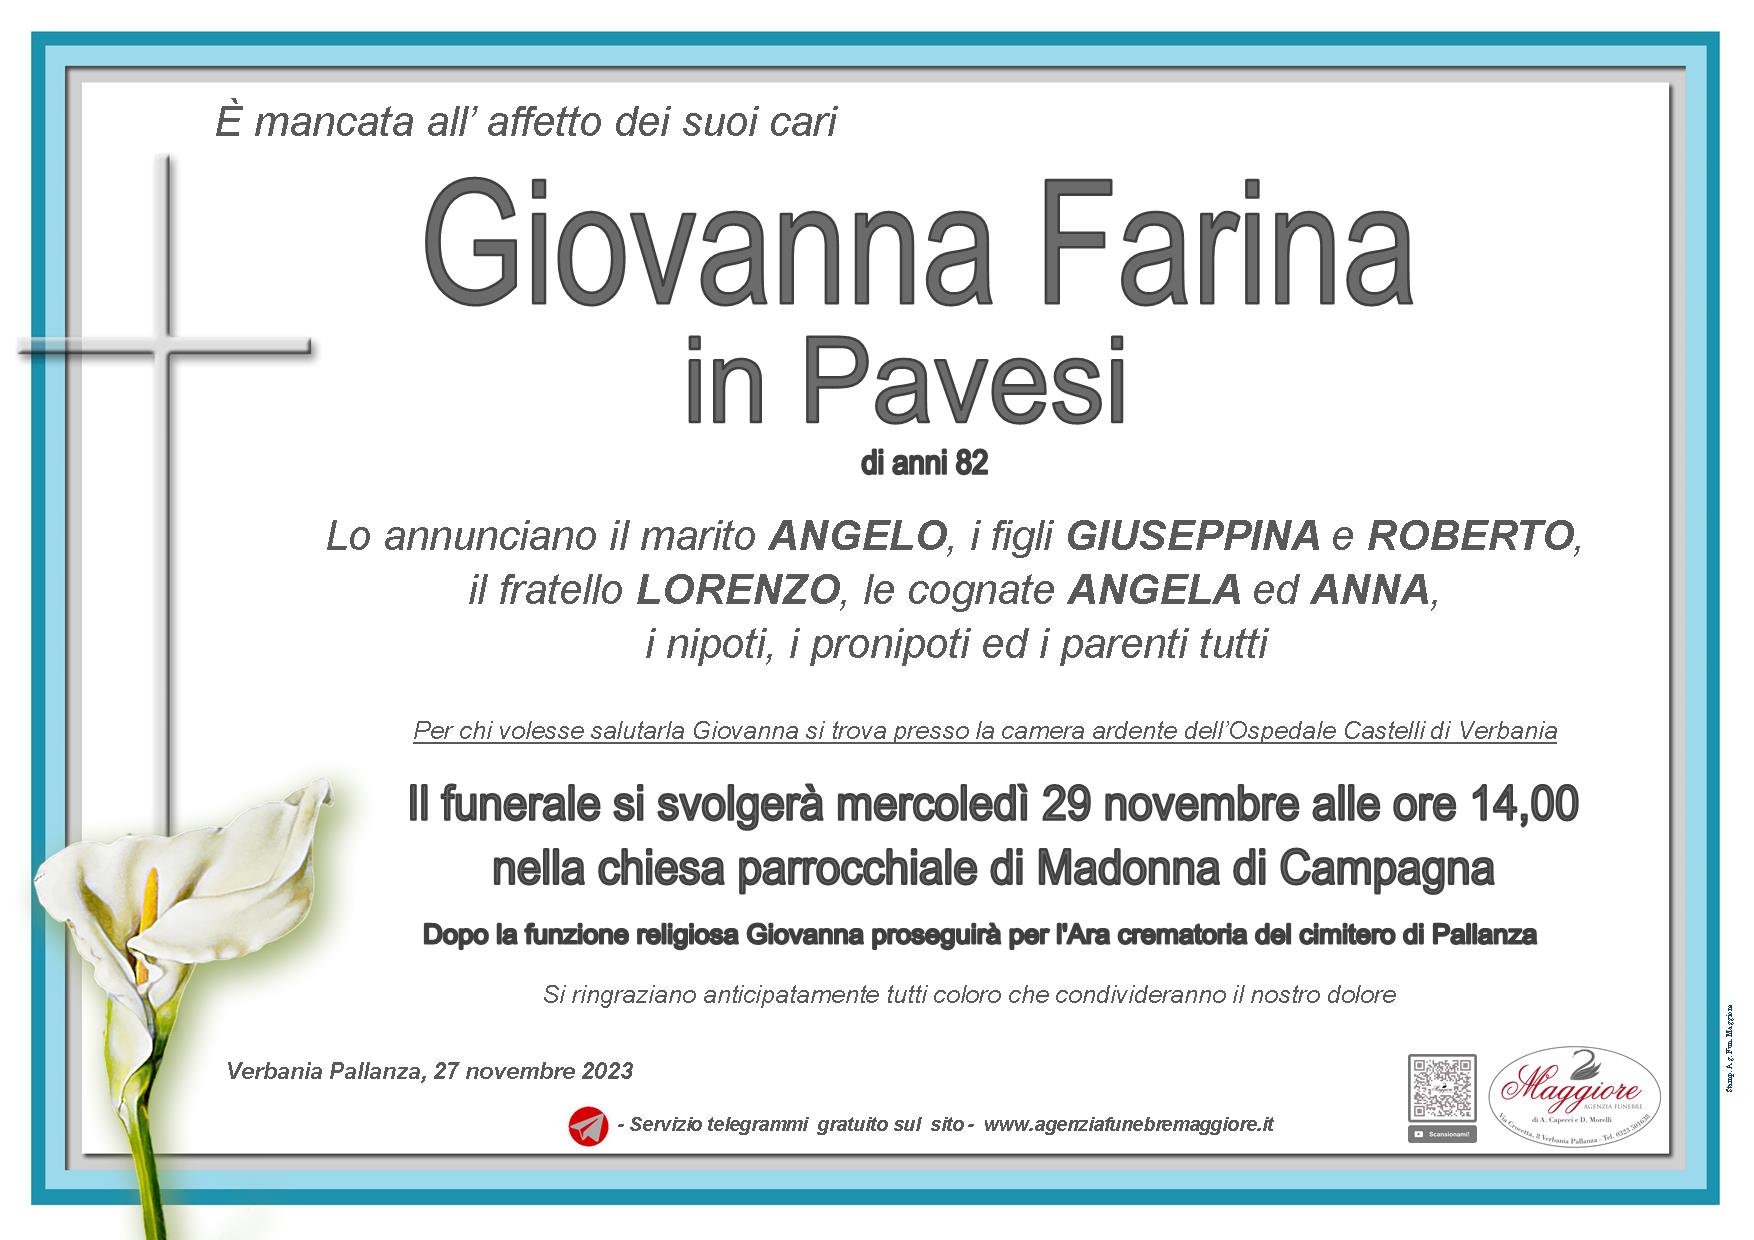 Giovanna Farina in Pavesi